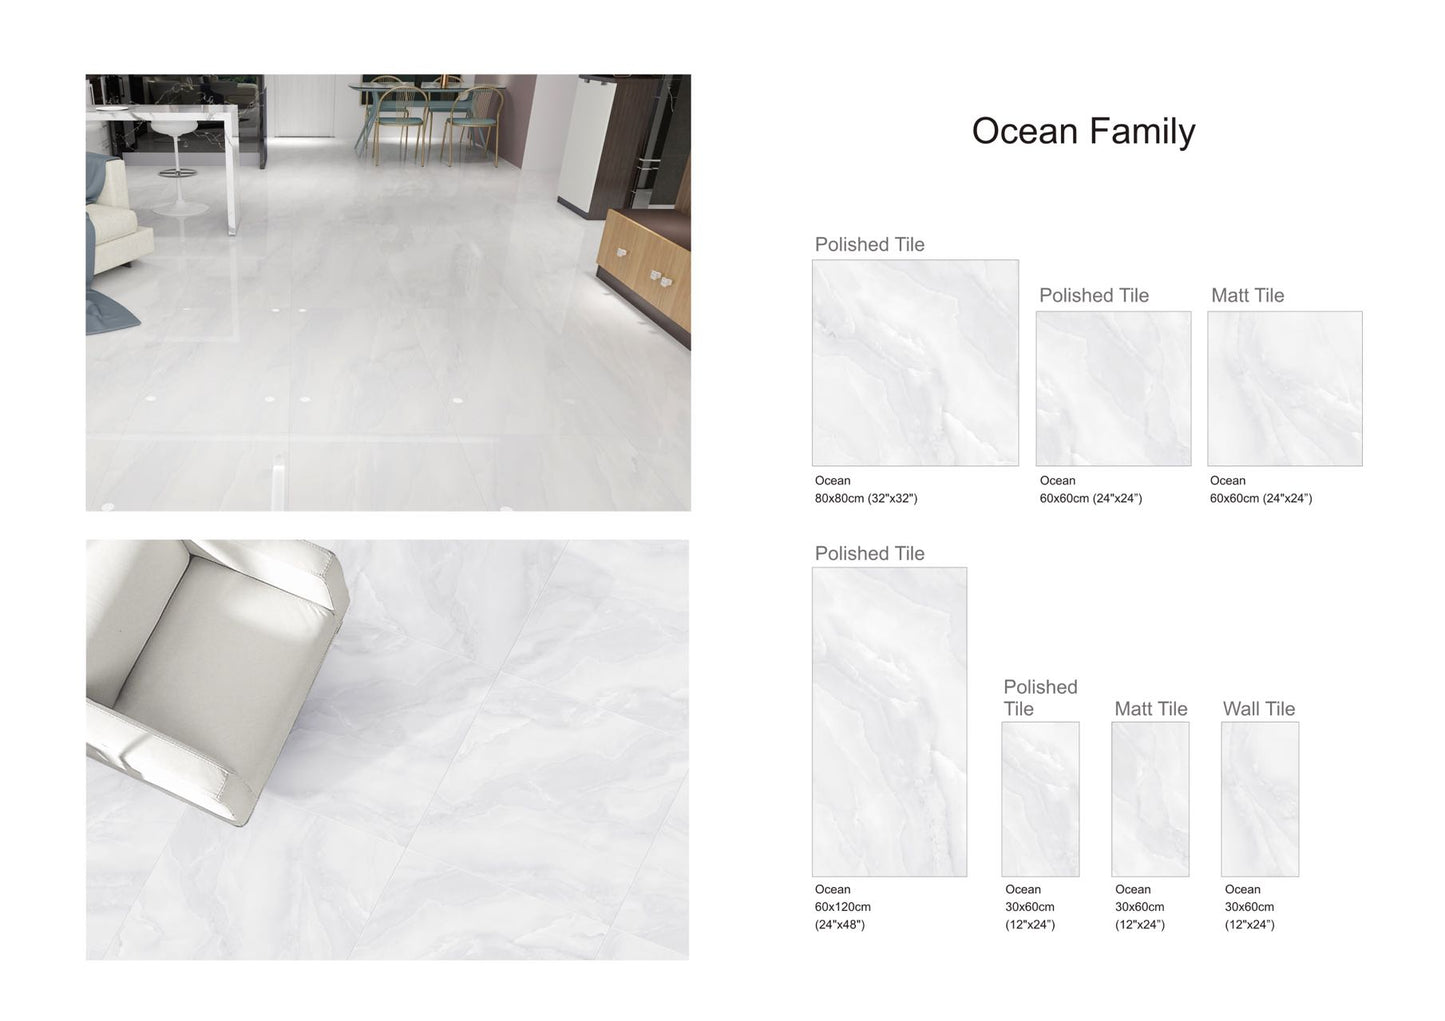 Ocean family Ceramic Wall Tile light gray 12"x24" 8pcs/box 16sf/box $23.84/BOX $1.49/sf